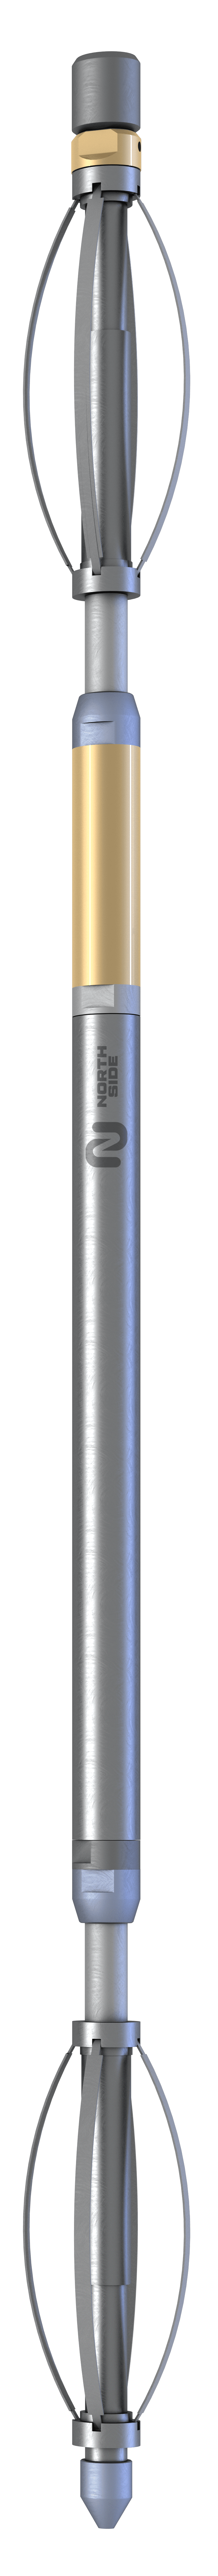 Multi Barrier Corrosion Logging Tool - Segmented Thicnkess Bond tool